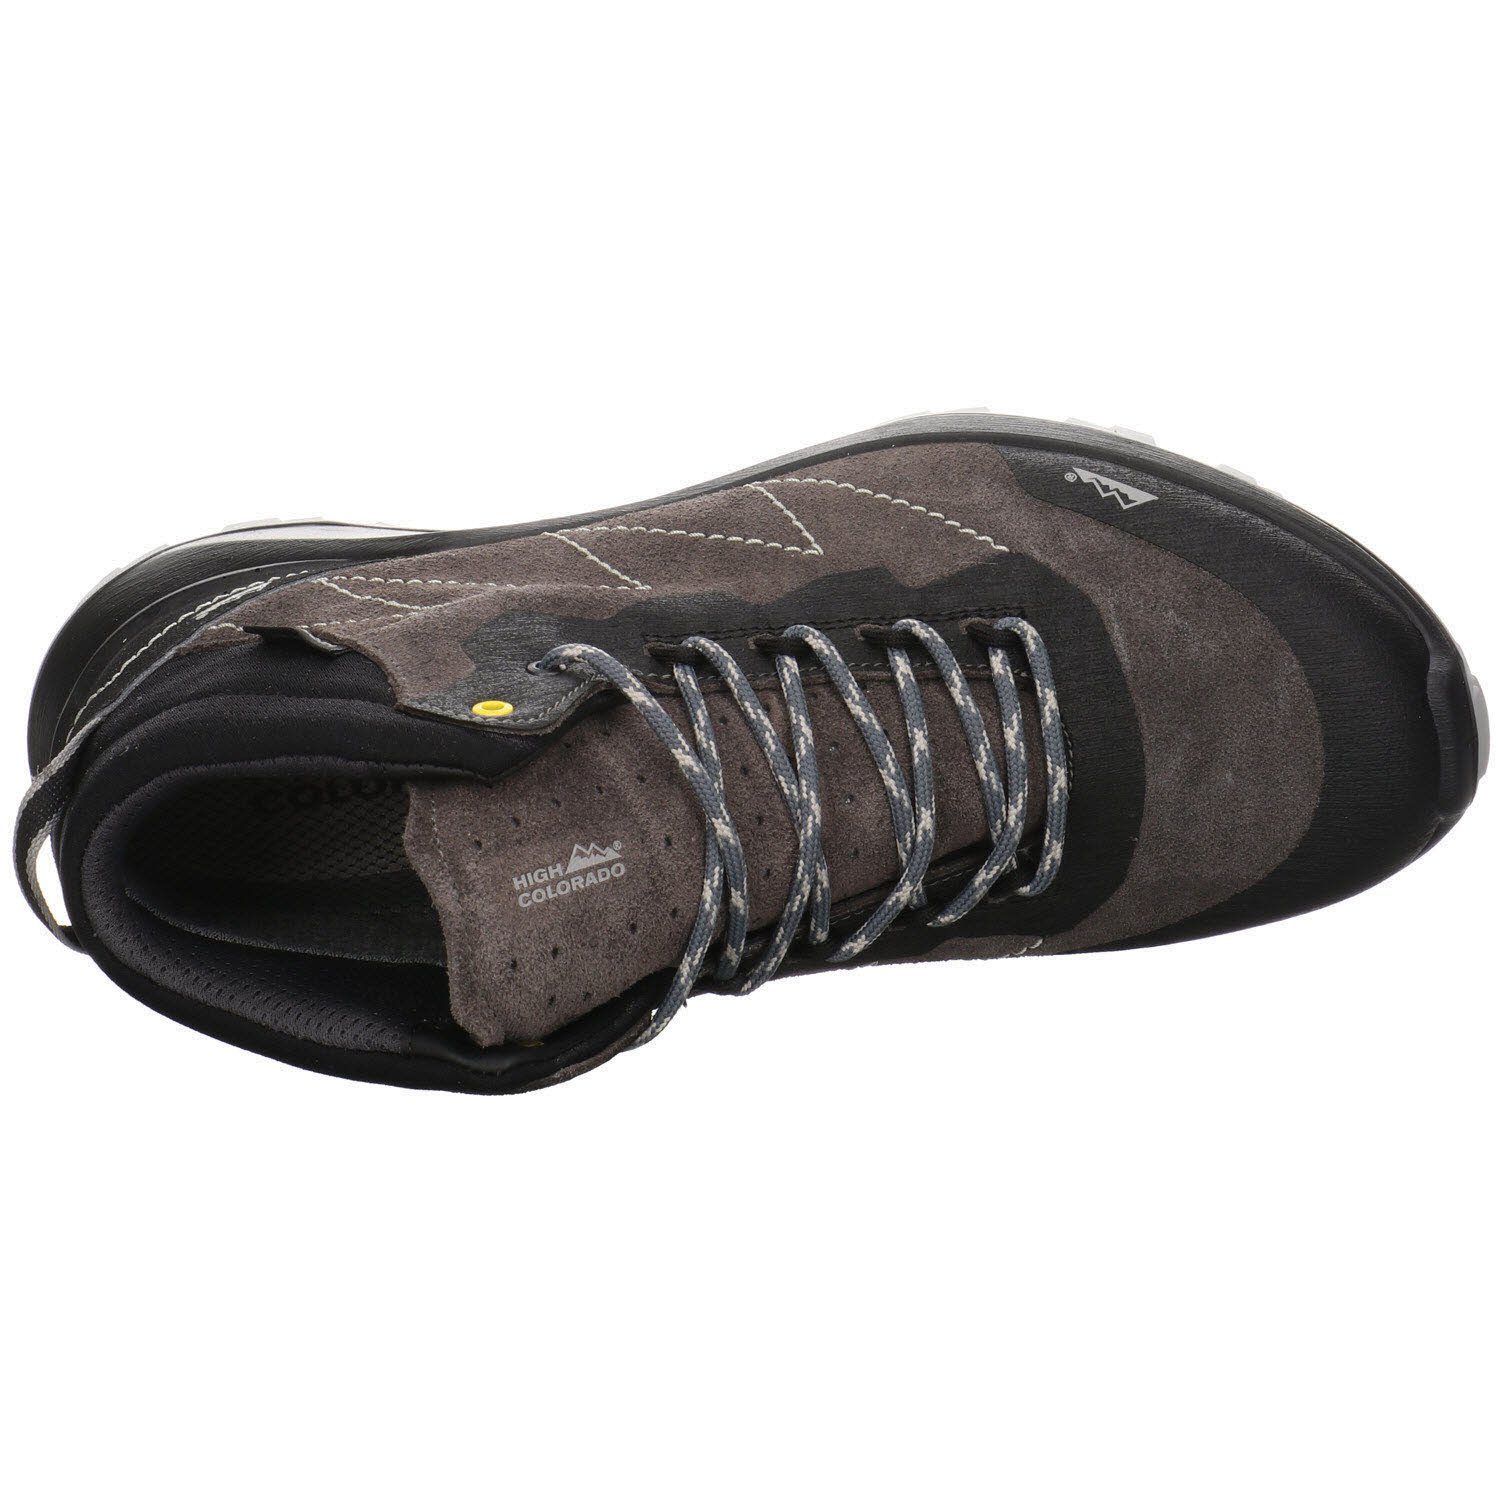 Mid Outdoorschuh Trail Schuhe Outdoor Leder-/Textilkombination Evo Outdoorschuh Colorado Herren High